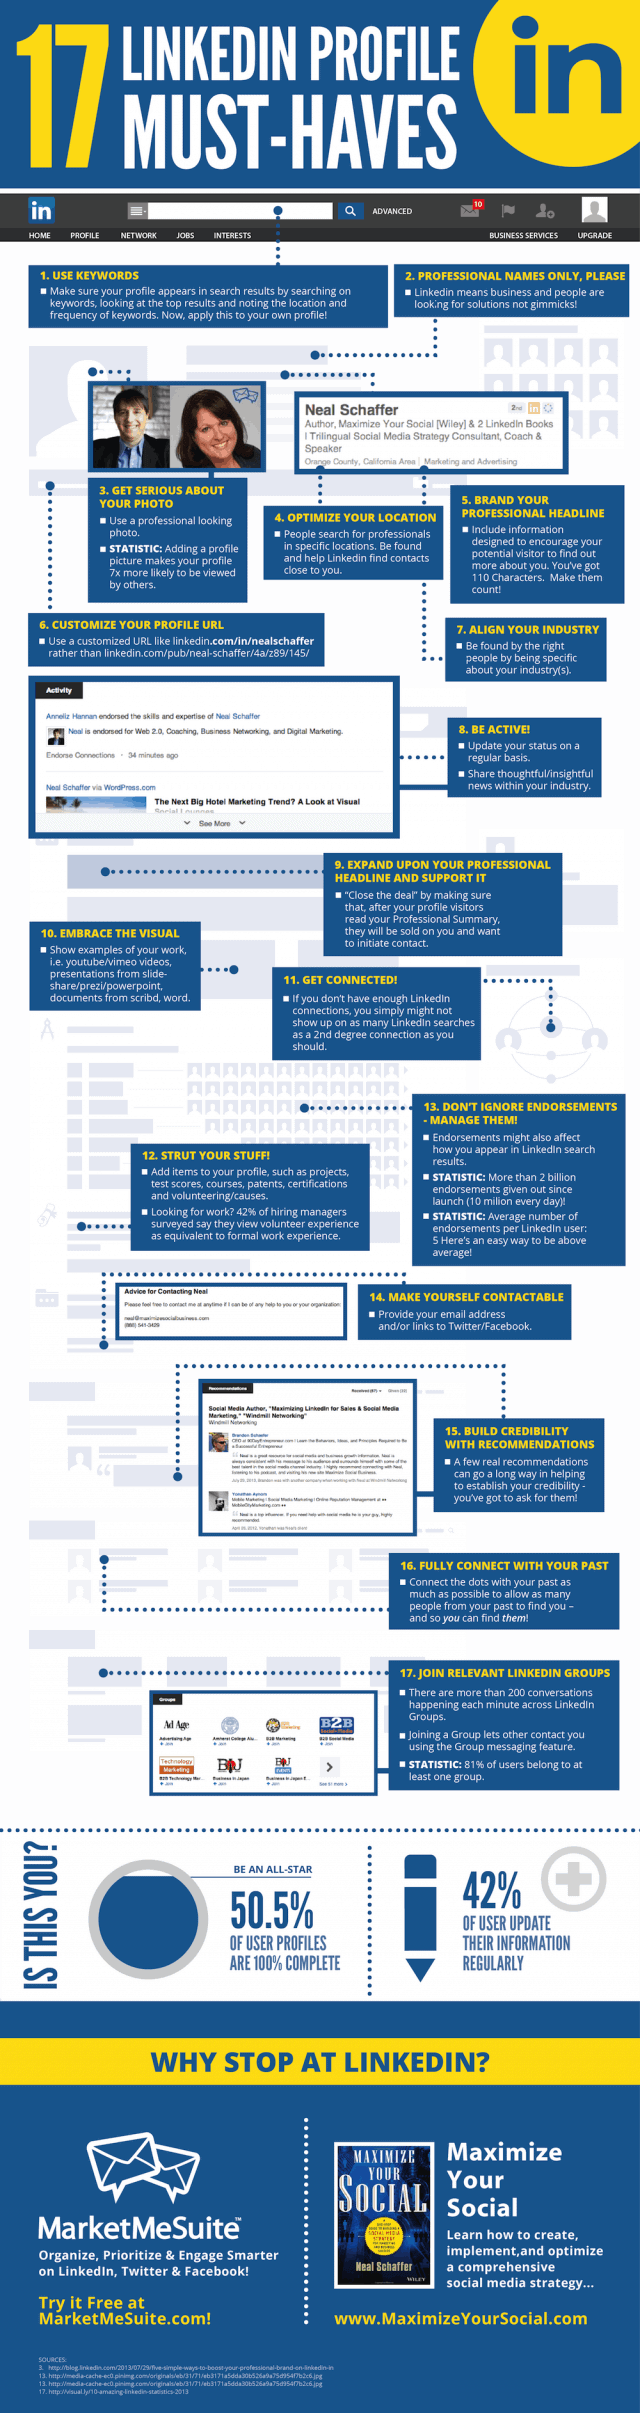 LinkedIn-Perfect-Profile-Tips-Summary-Infographic-1